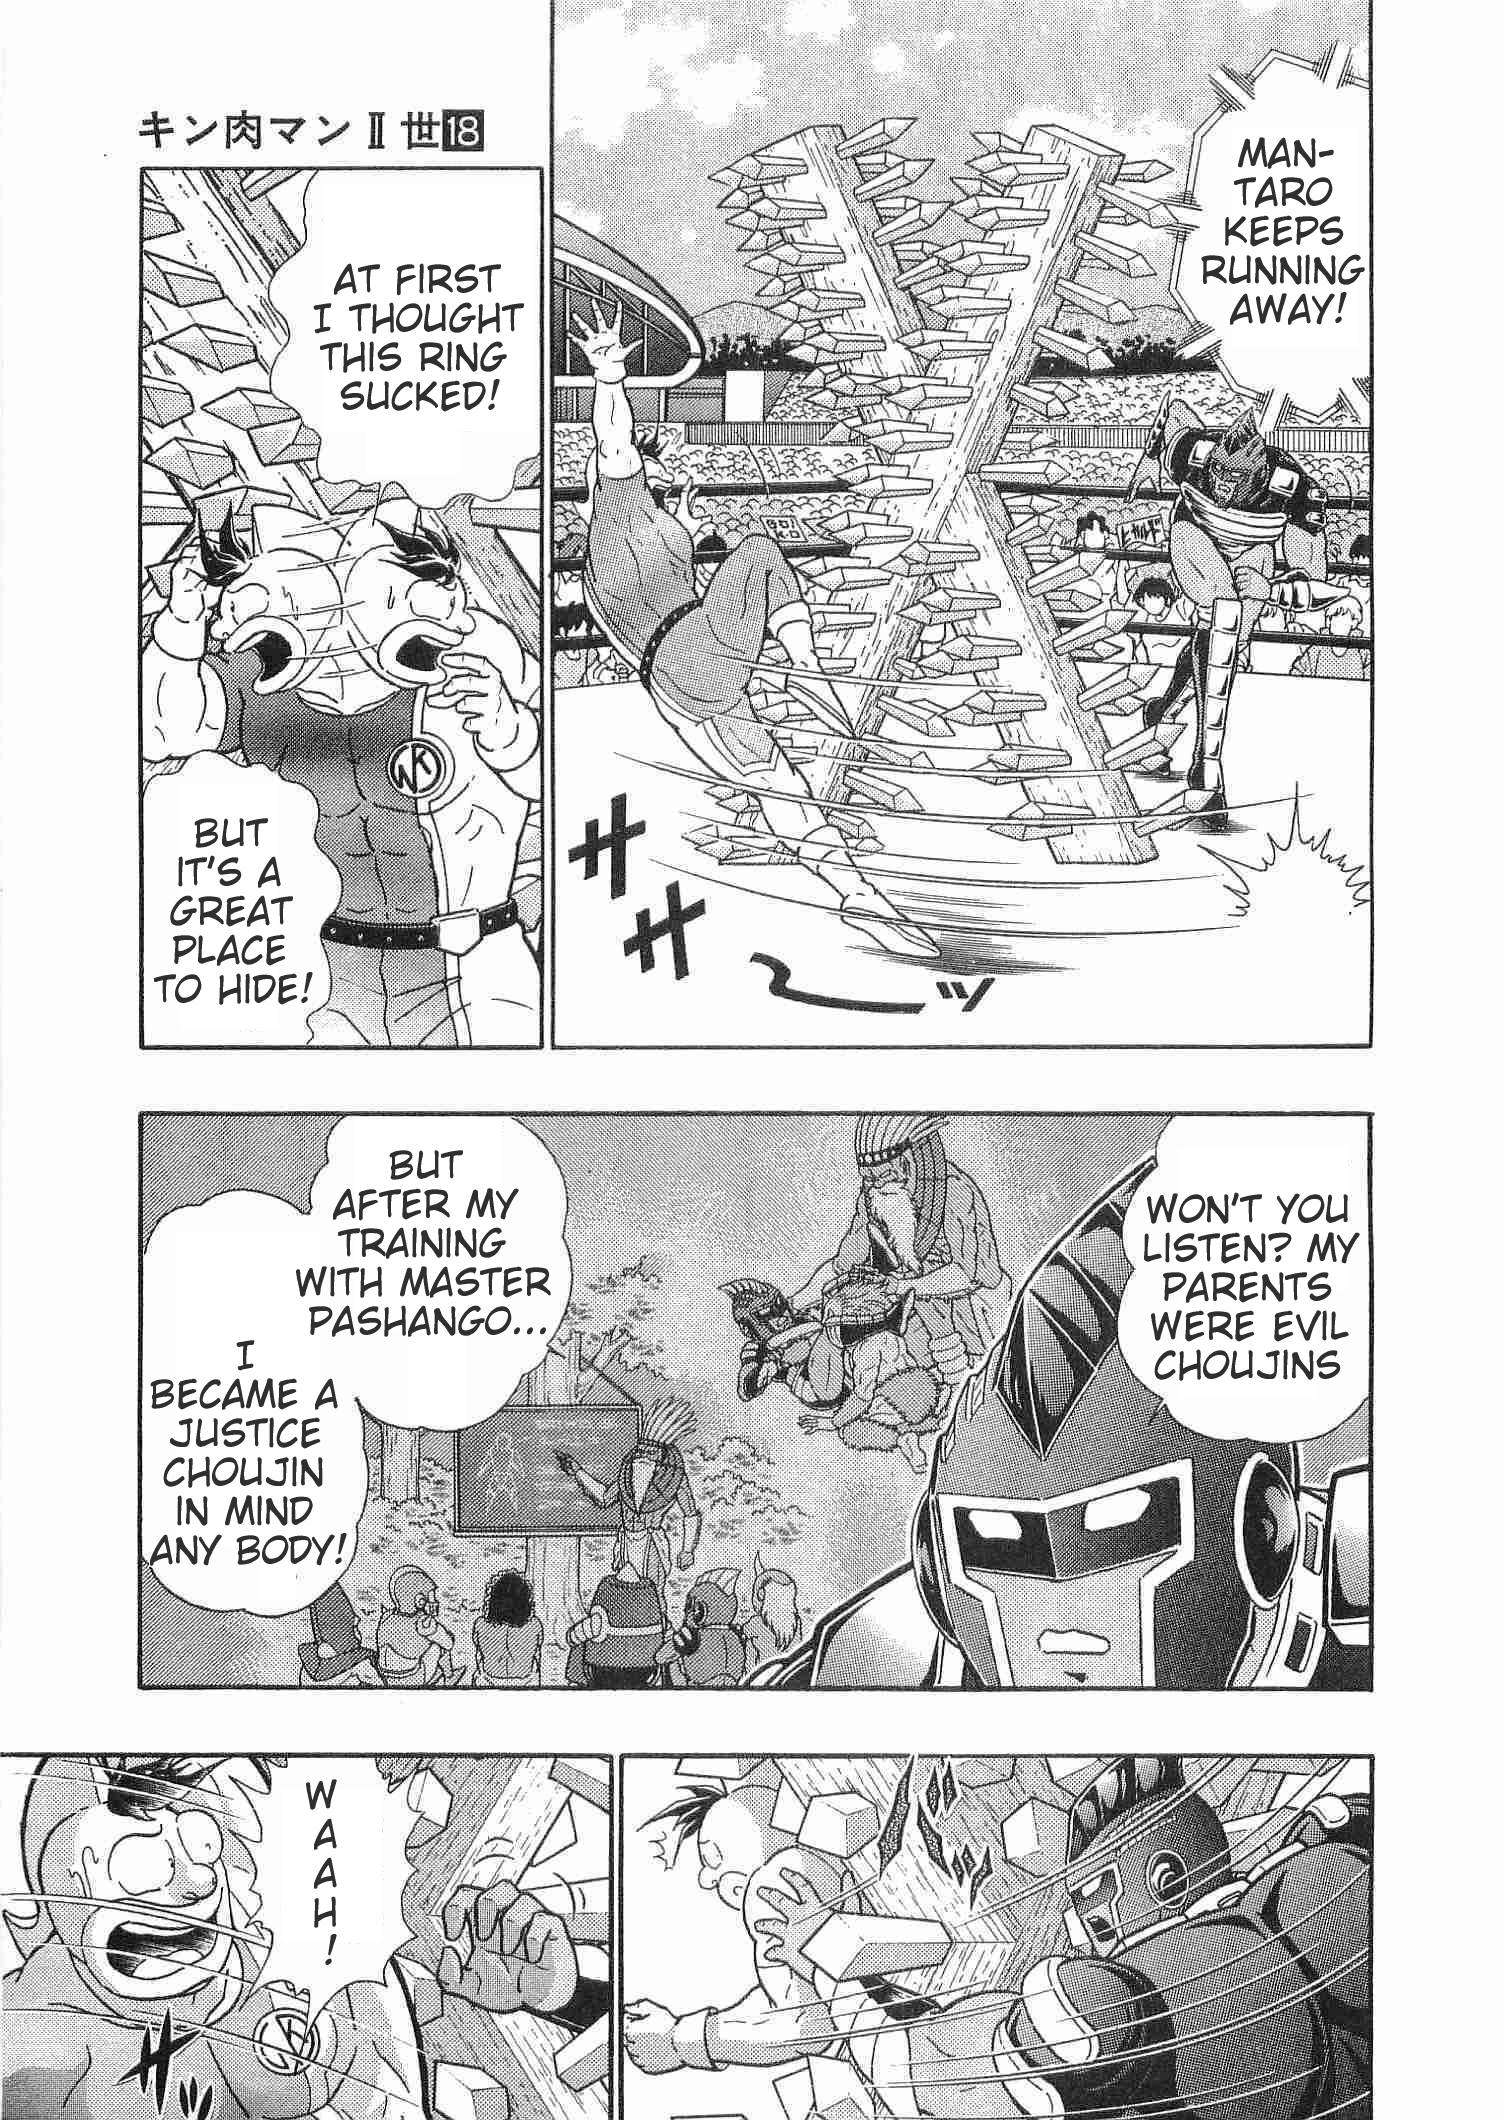 Kinnikuman II Sei - 2nd Generation - chapter 182 - #5